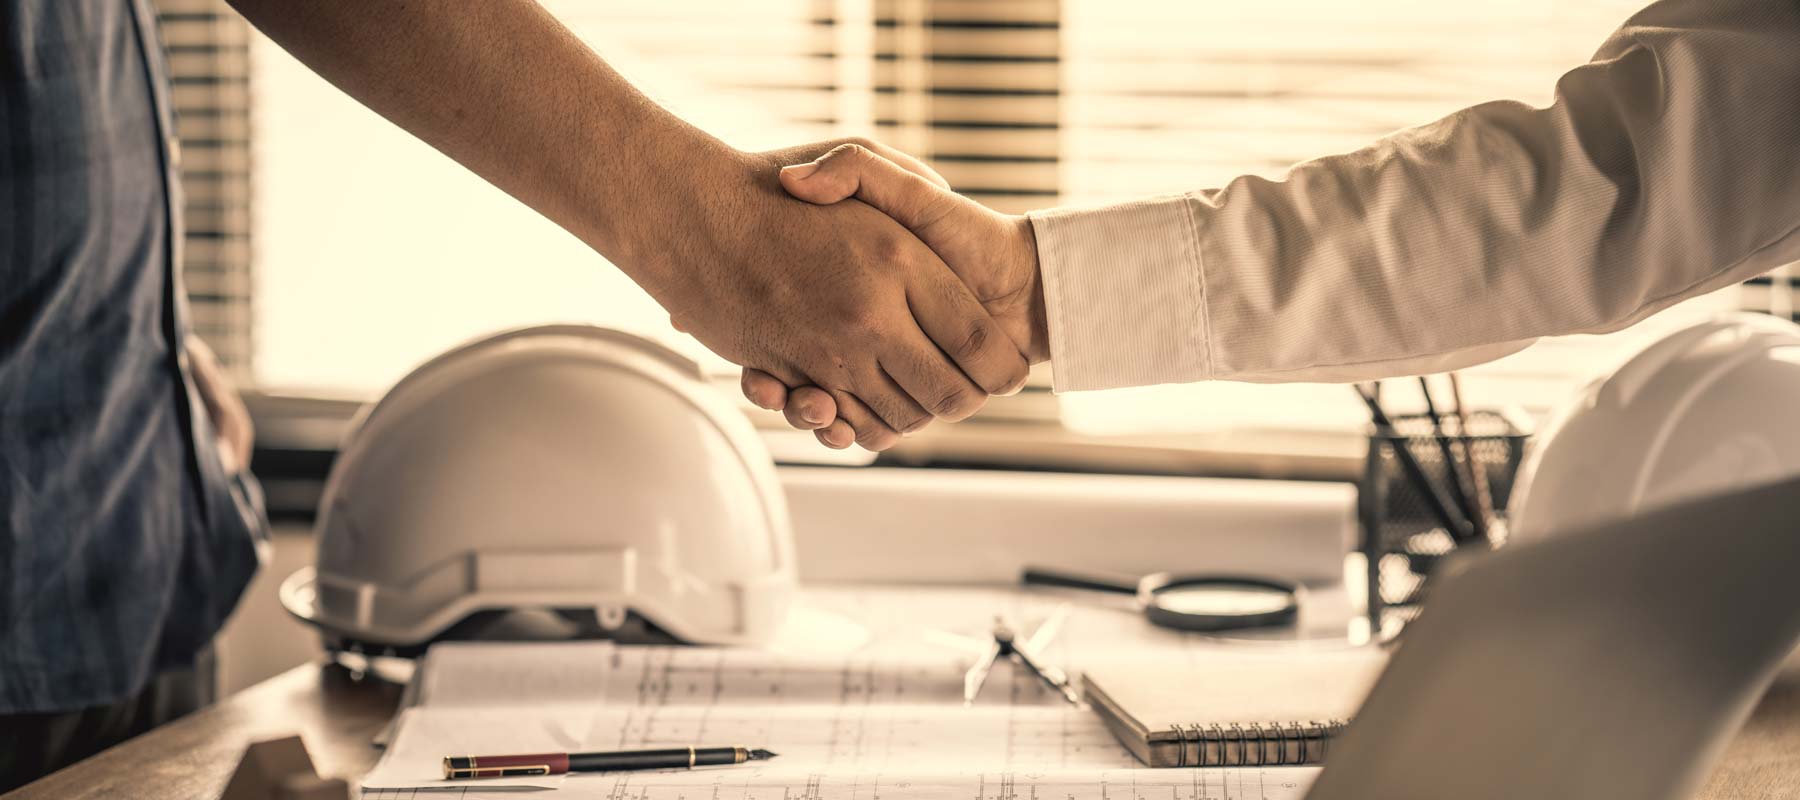 building consultants shaking hands